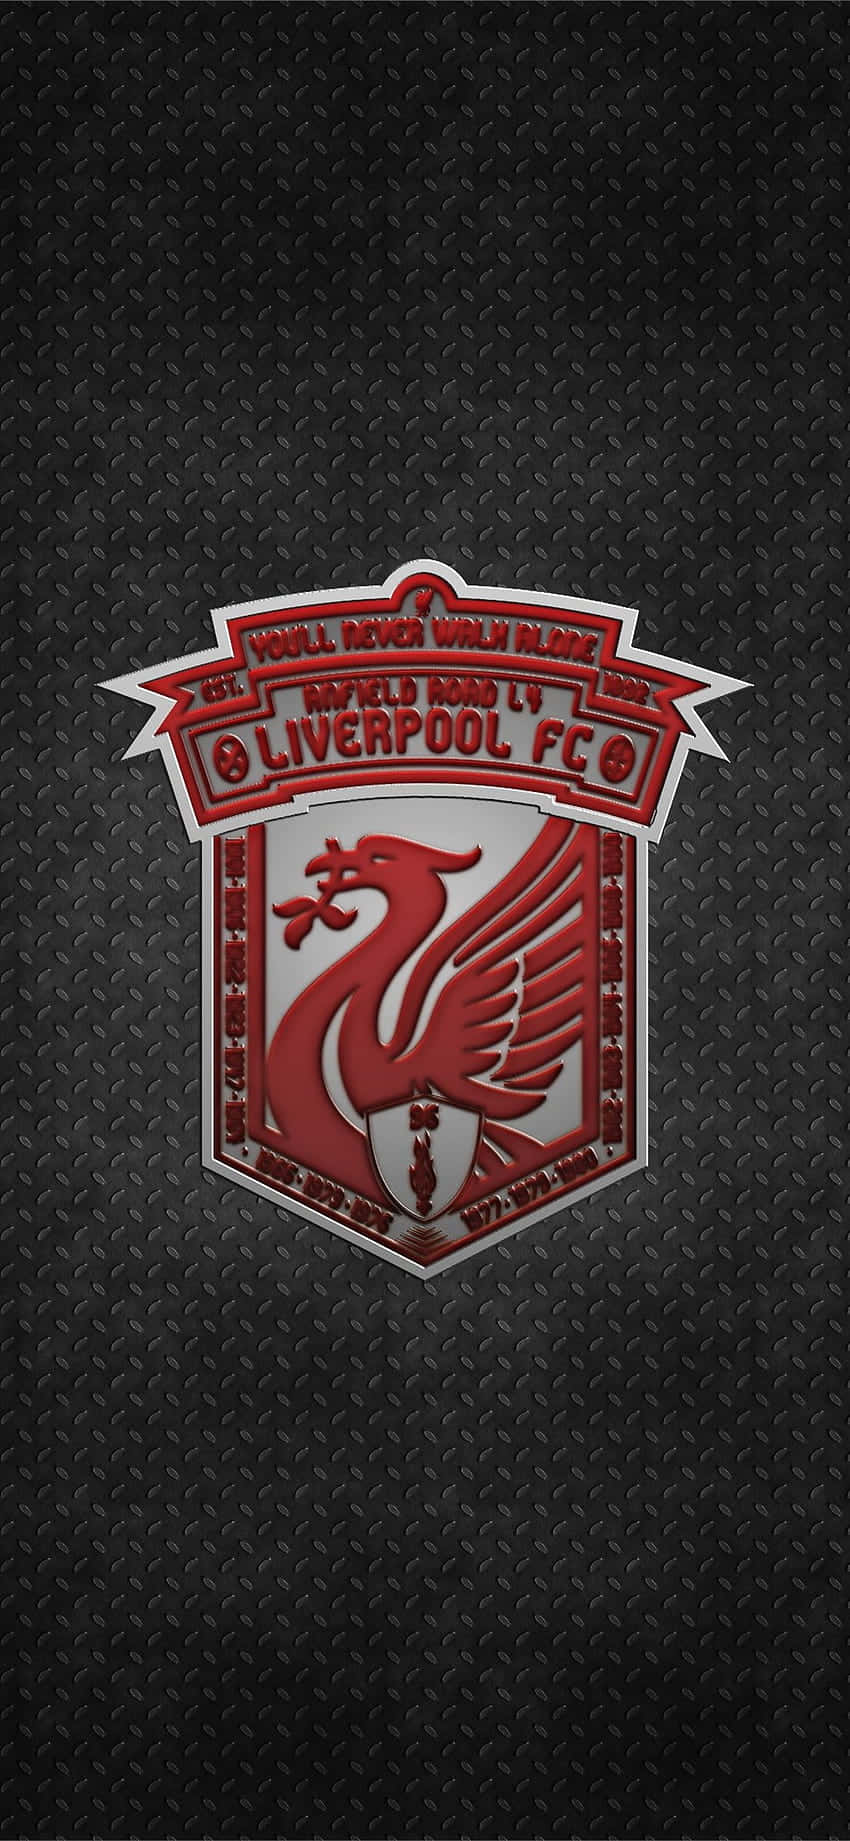 Liverpoolwappen Hintergrundbilder, Liverpool Wappen Hintergrundbilder, Liverpool Wappen Hintergrundbilder, Liverpool Wappen Hintergrundbilder Wallpaper